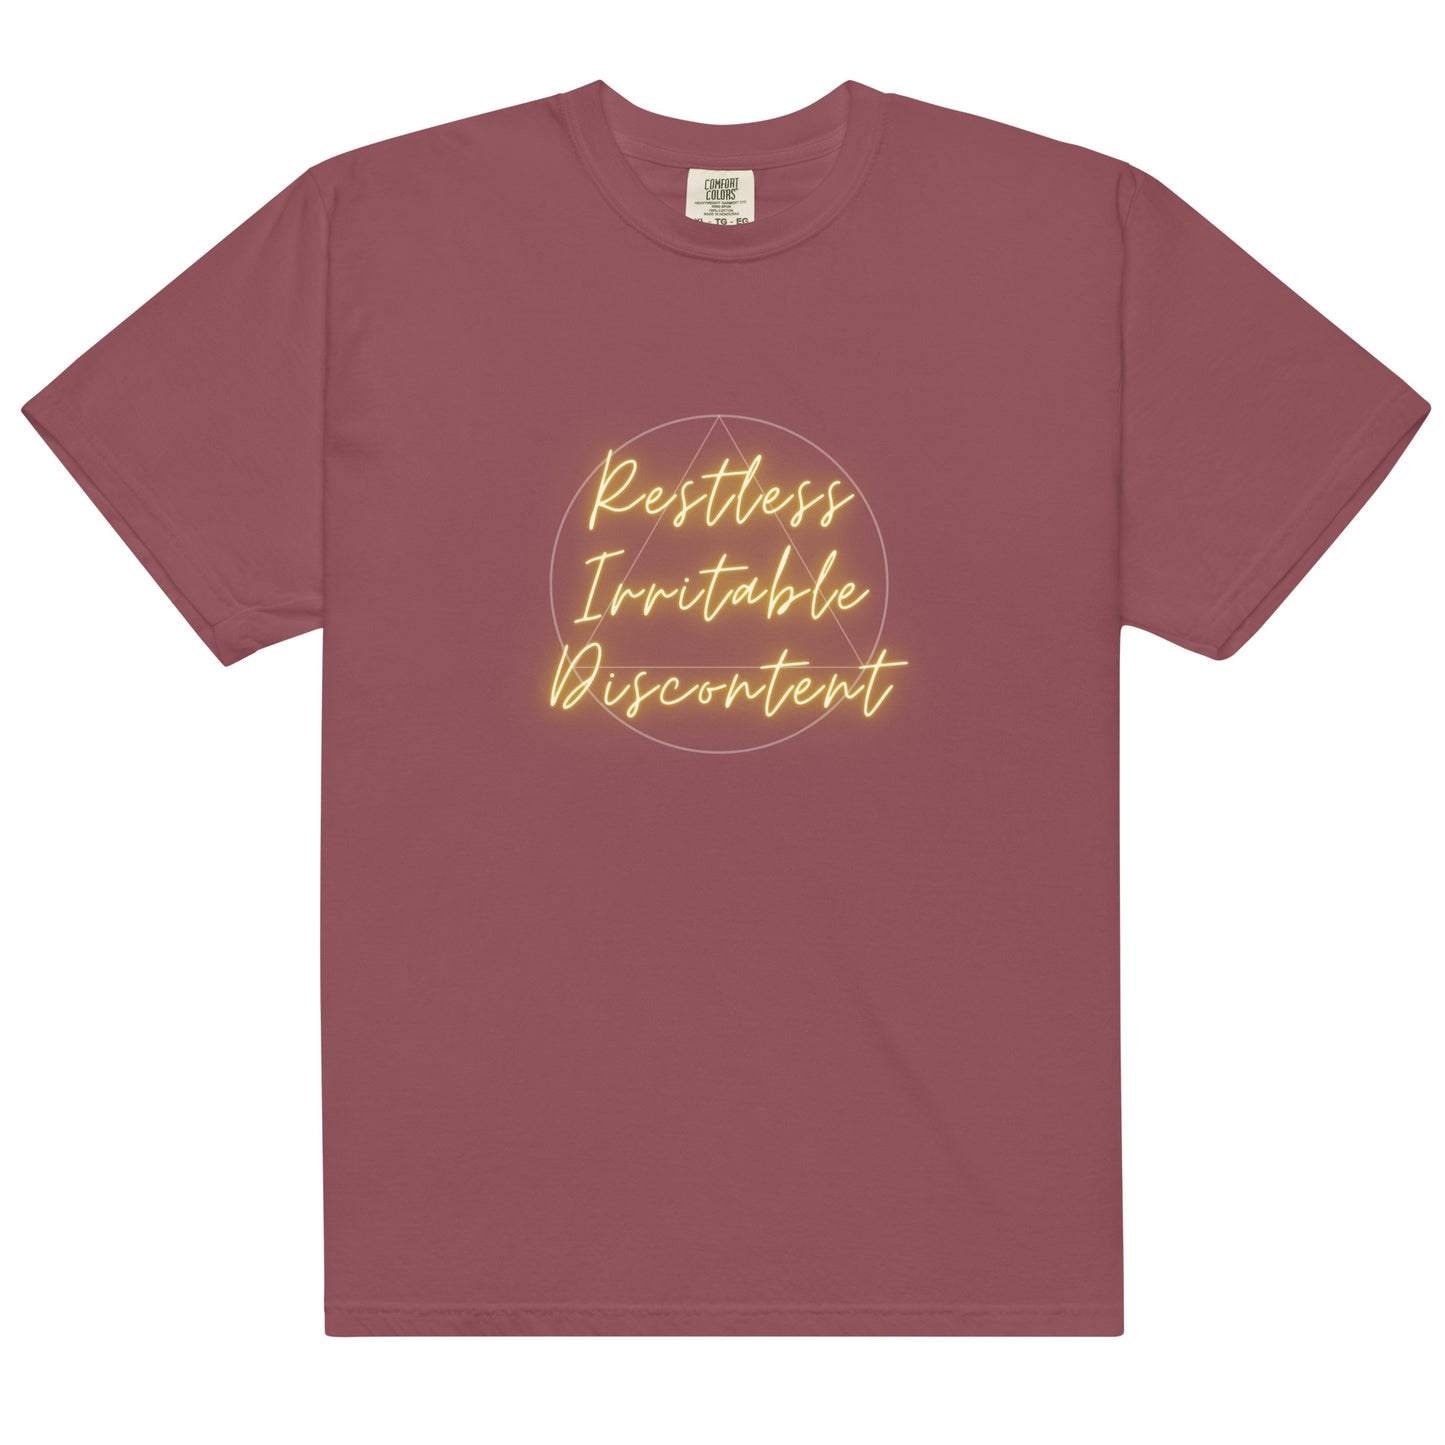 Restless Irritable Discontent T-Shirt